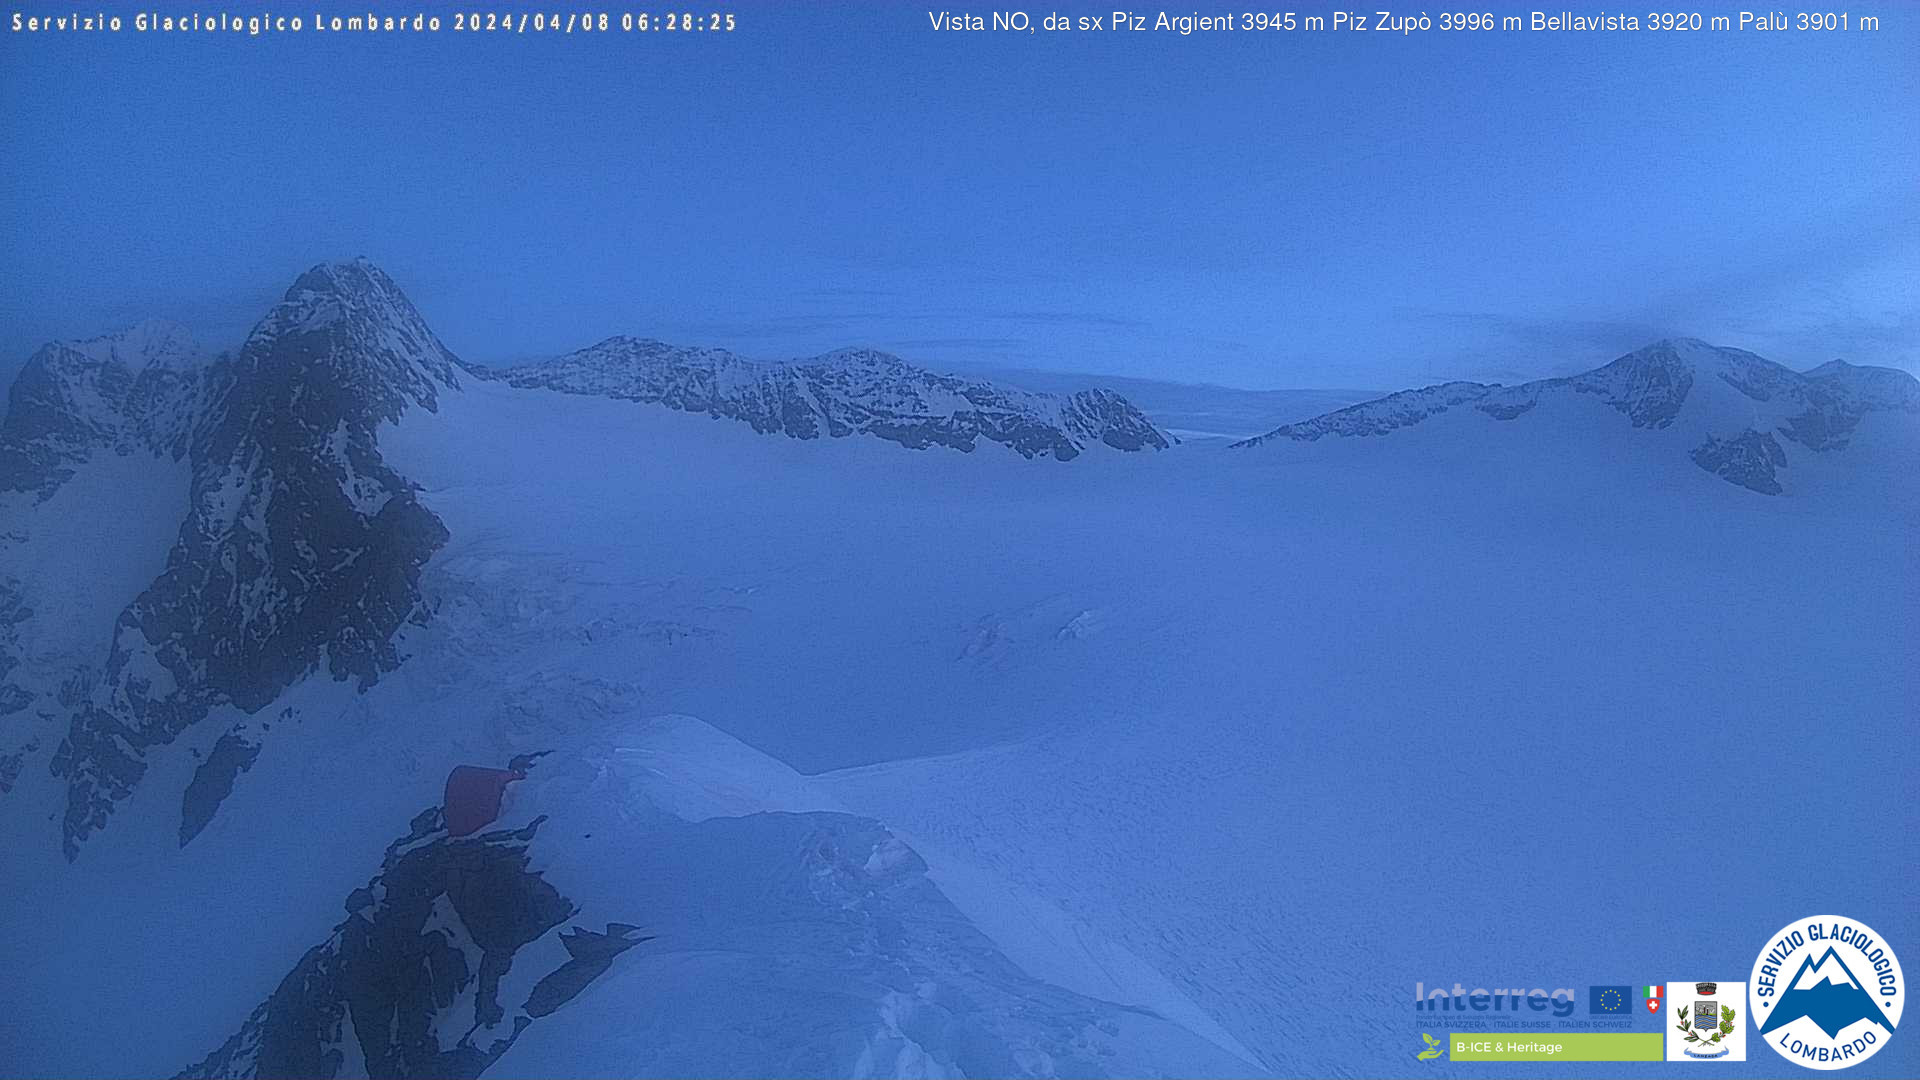 time-lapse frame, Altopiano Fellaria Palù 3560 m nord webcam